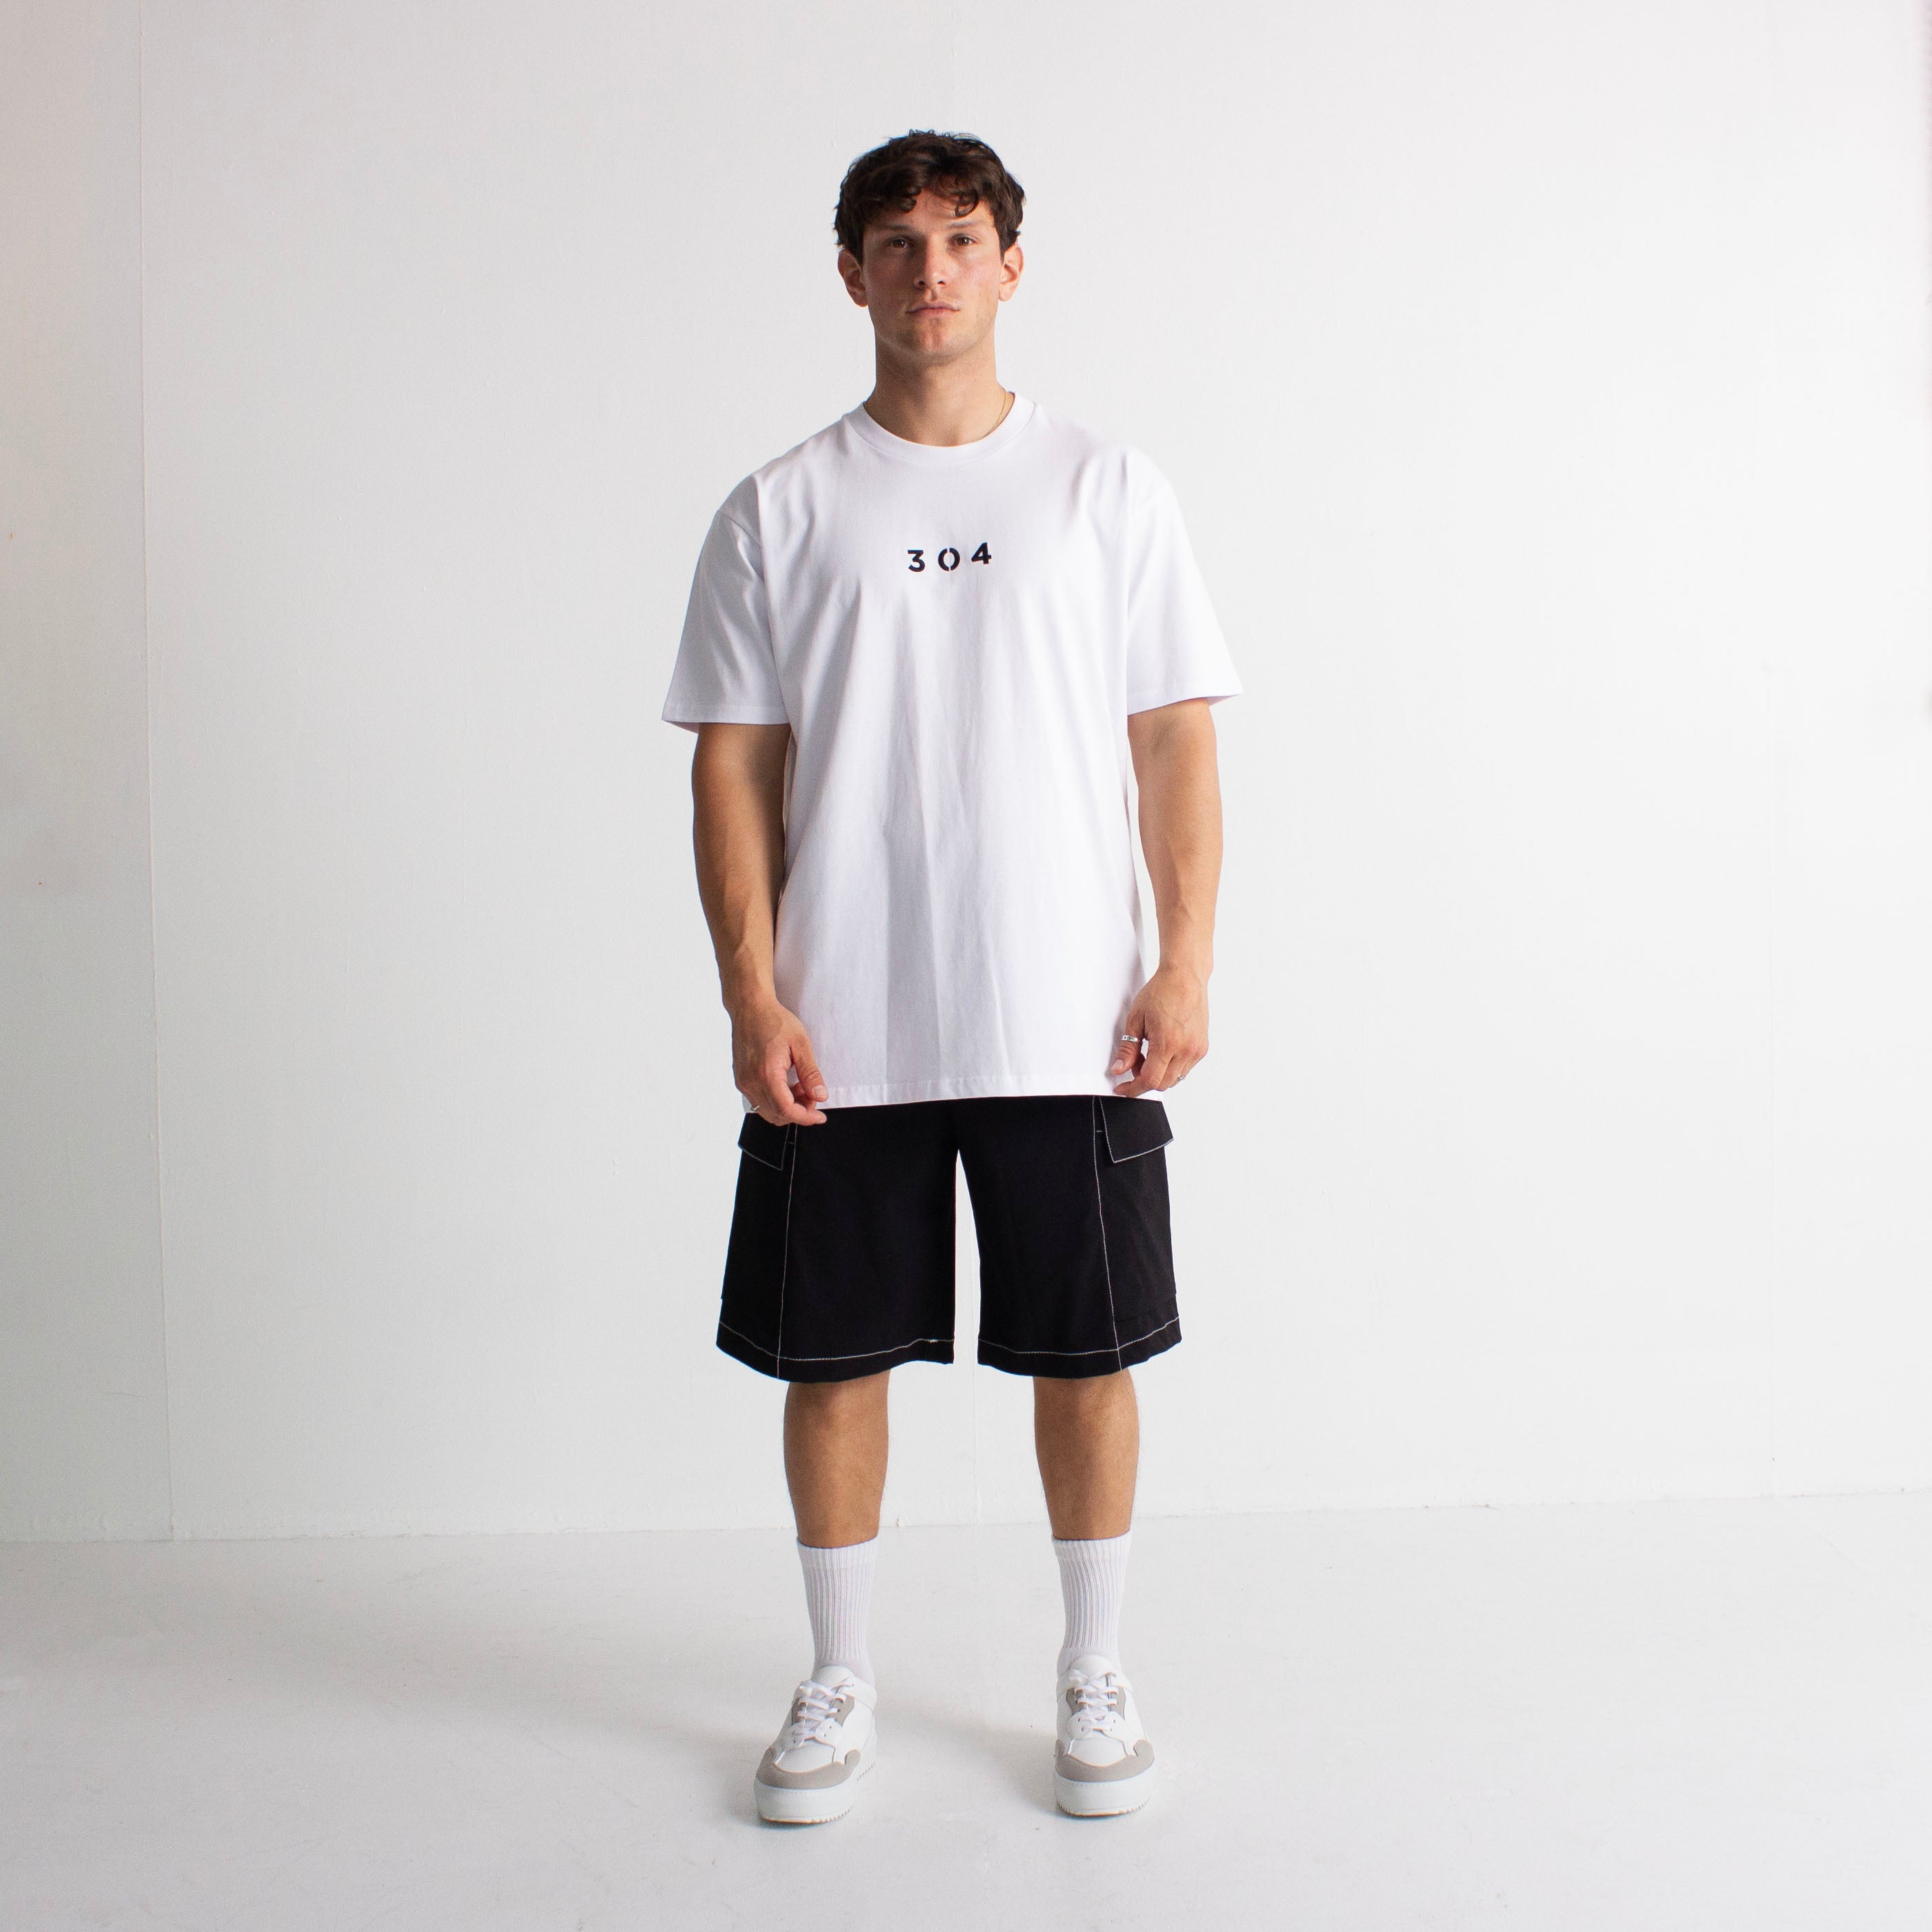 304 Mens Enzo Core T-shirt White